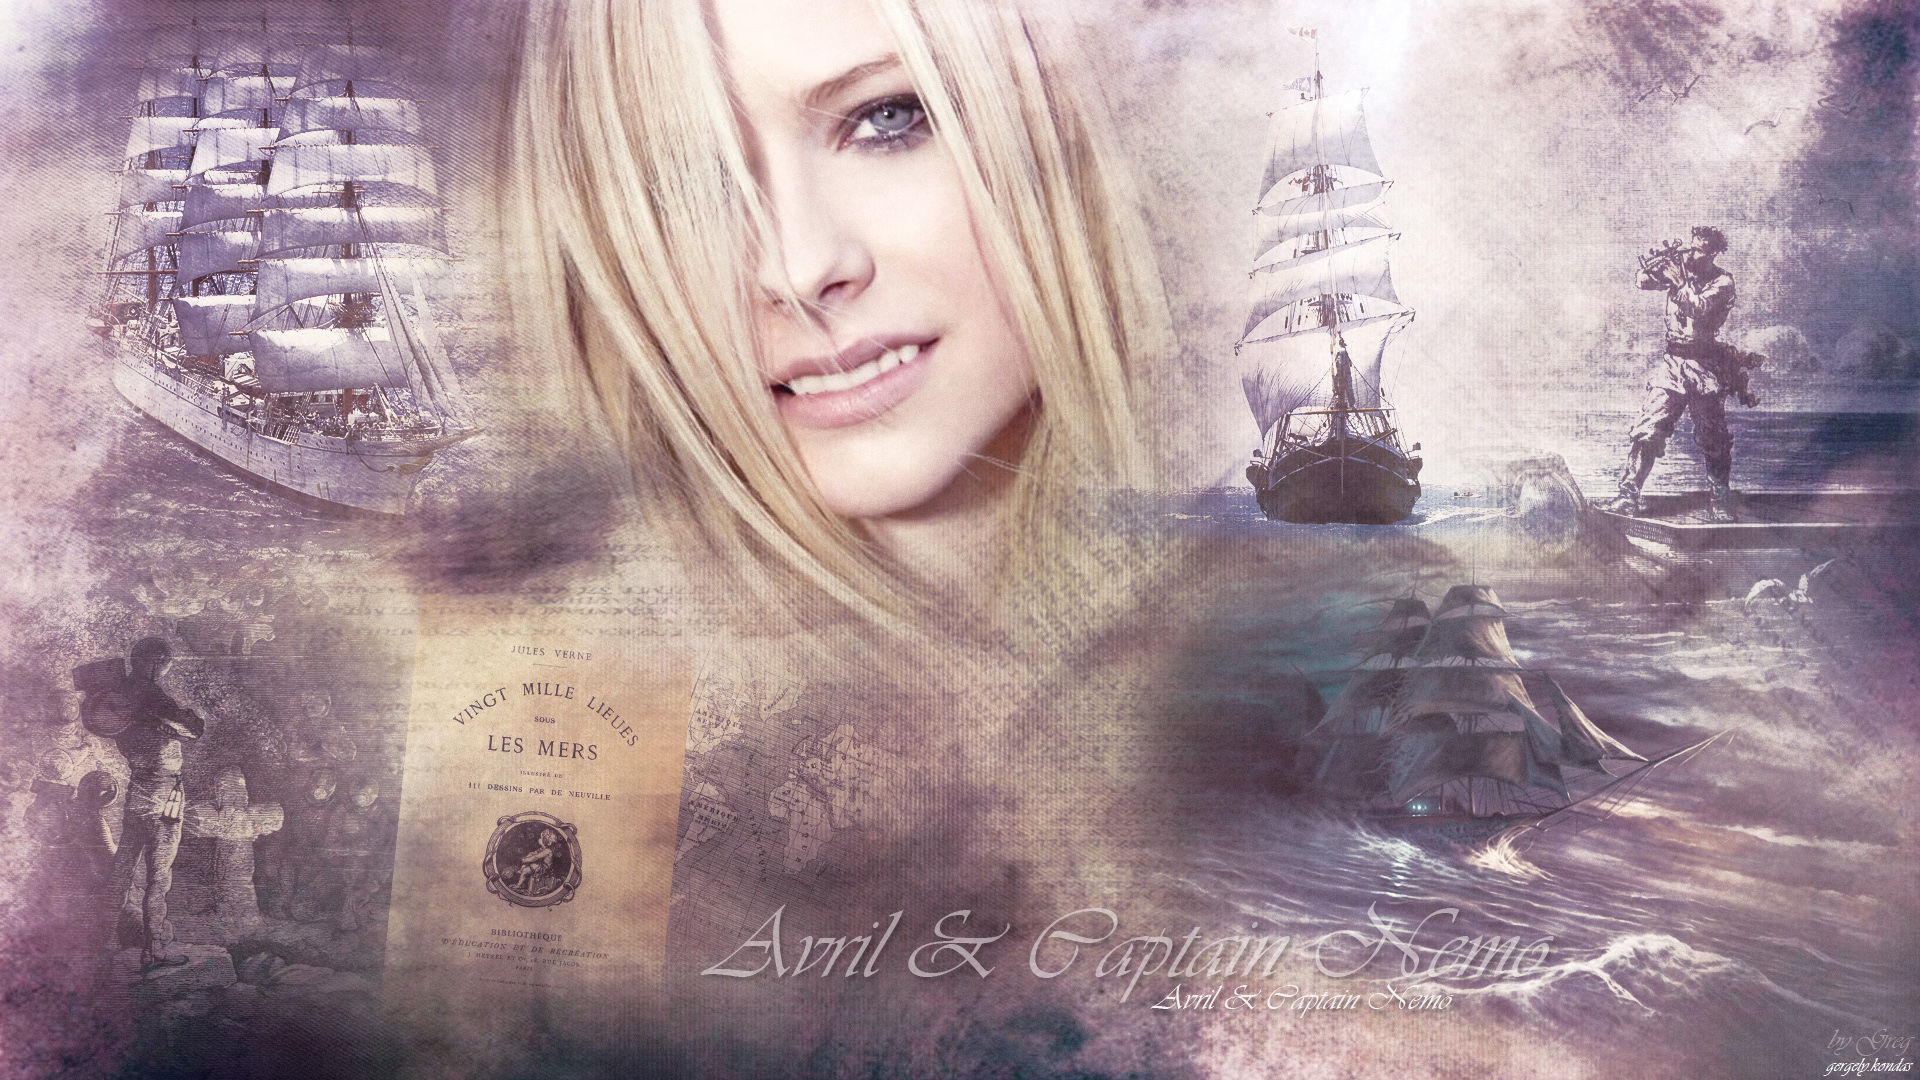 Avril Lavigne in a musical pose for a desktop wallpaper.